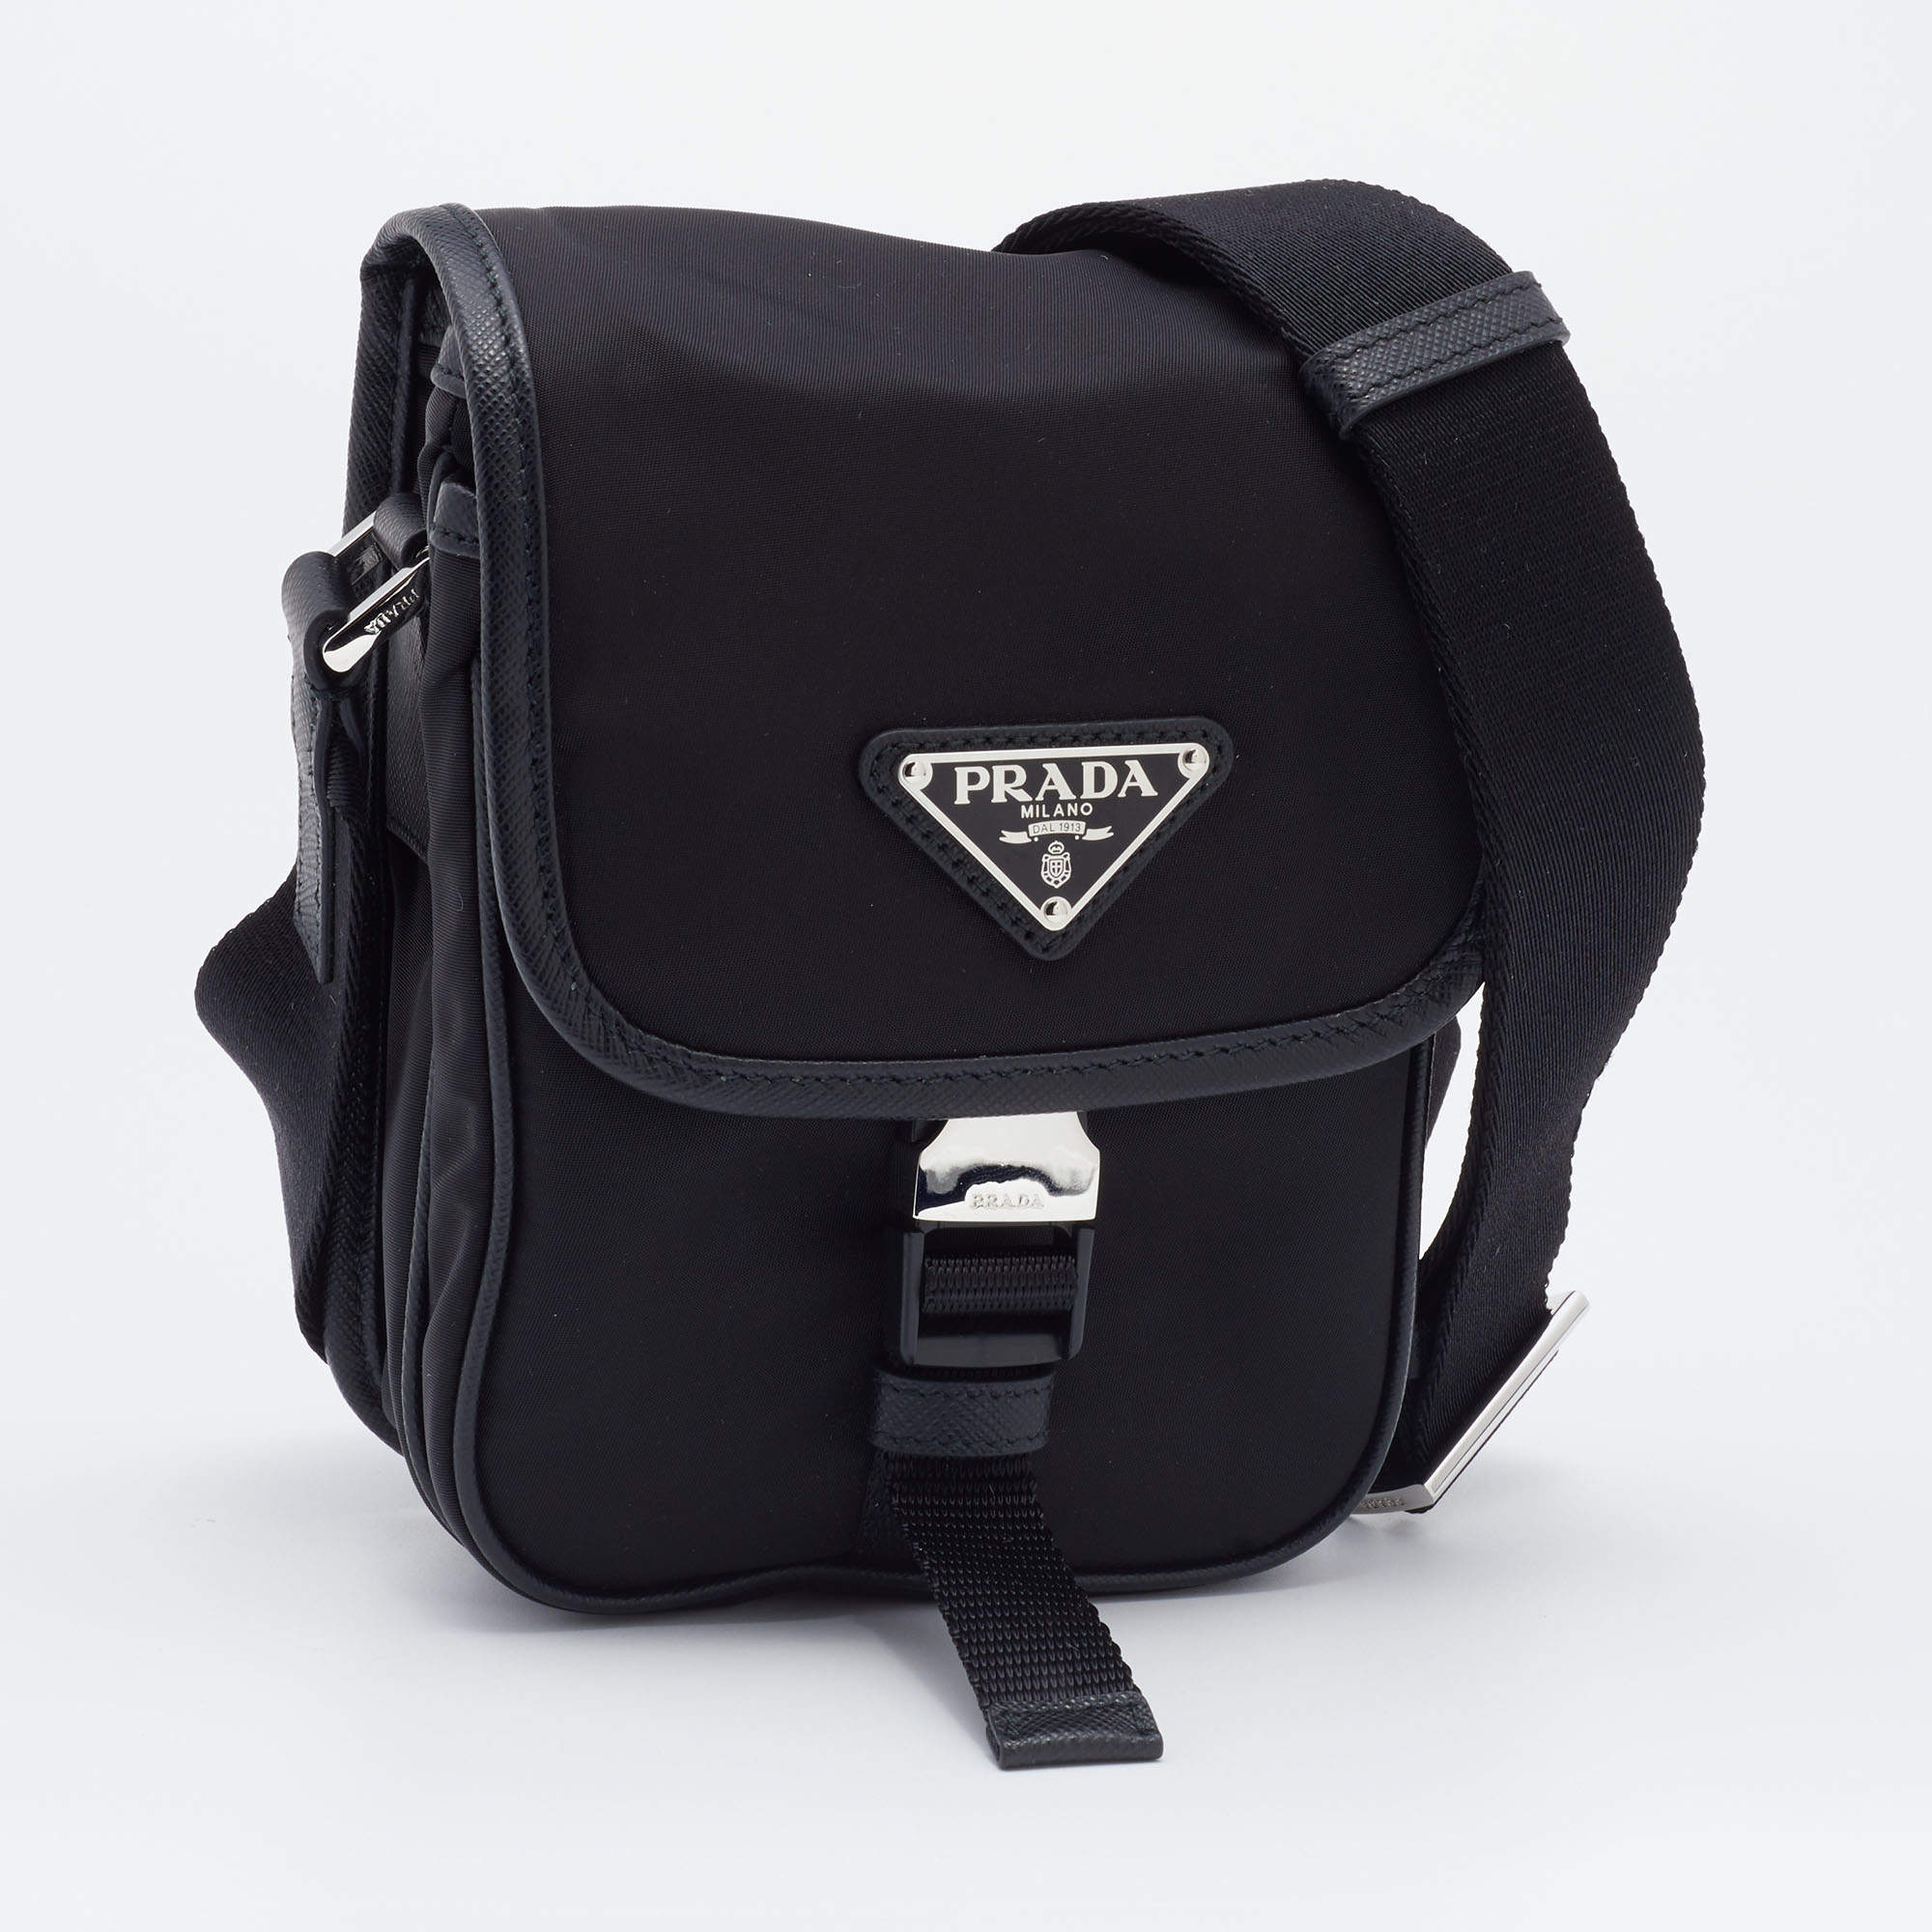 Prada Saffiano Leather And Leather Shoulder Bag in Black for Men